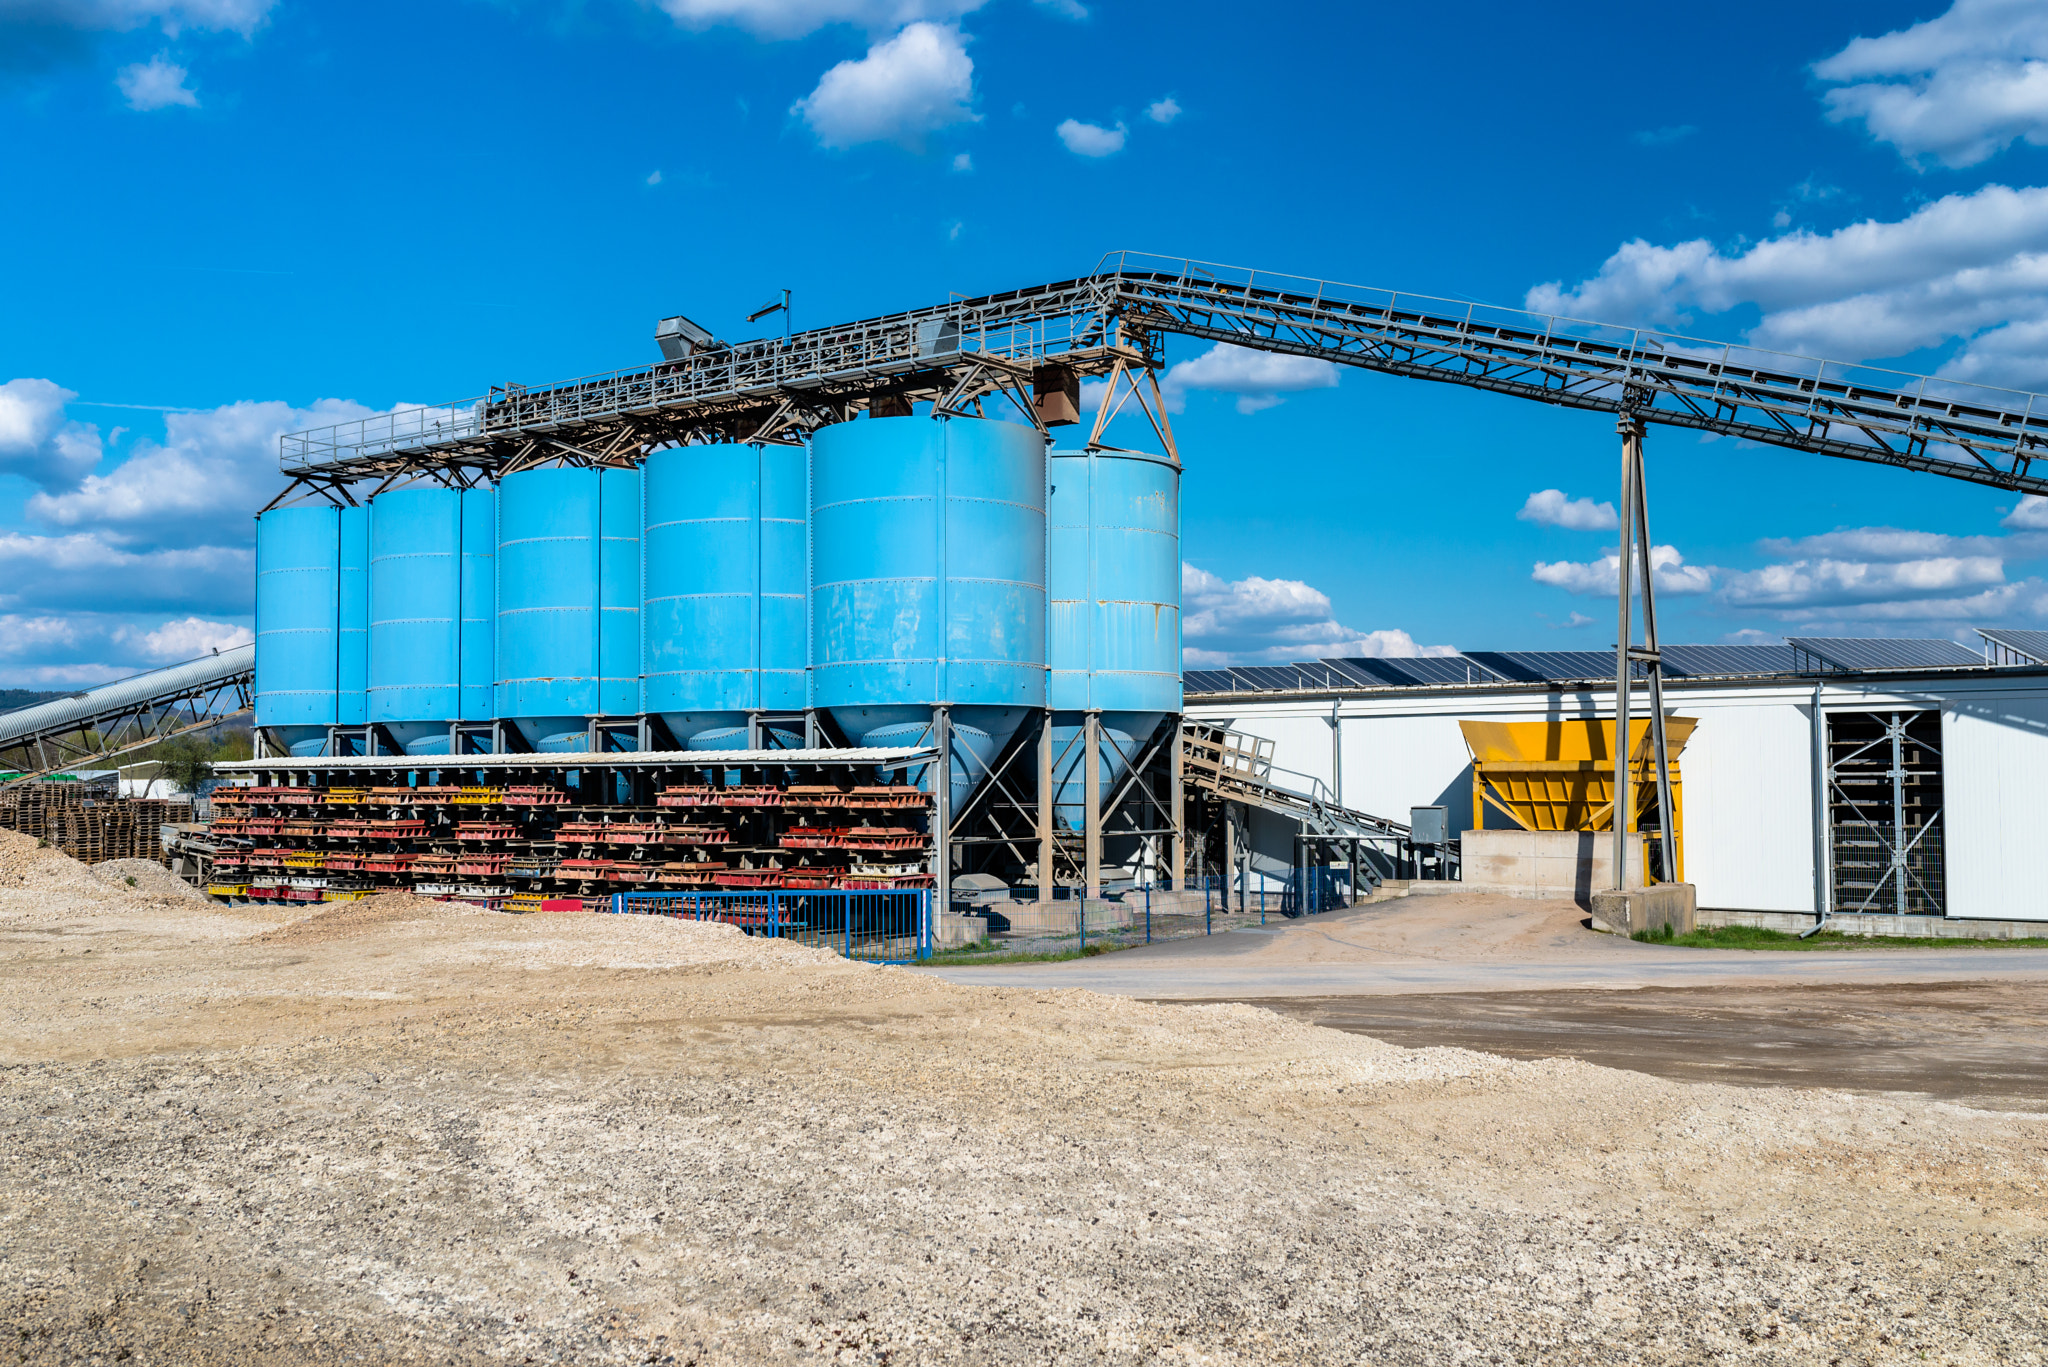 Big blue metallic Industrial silos for the prod